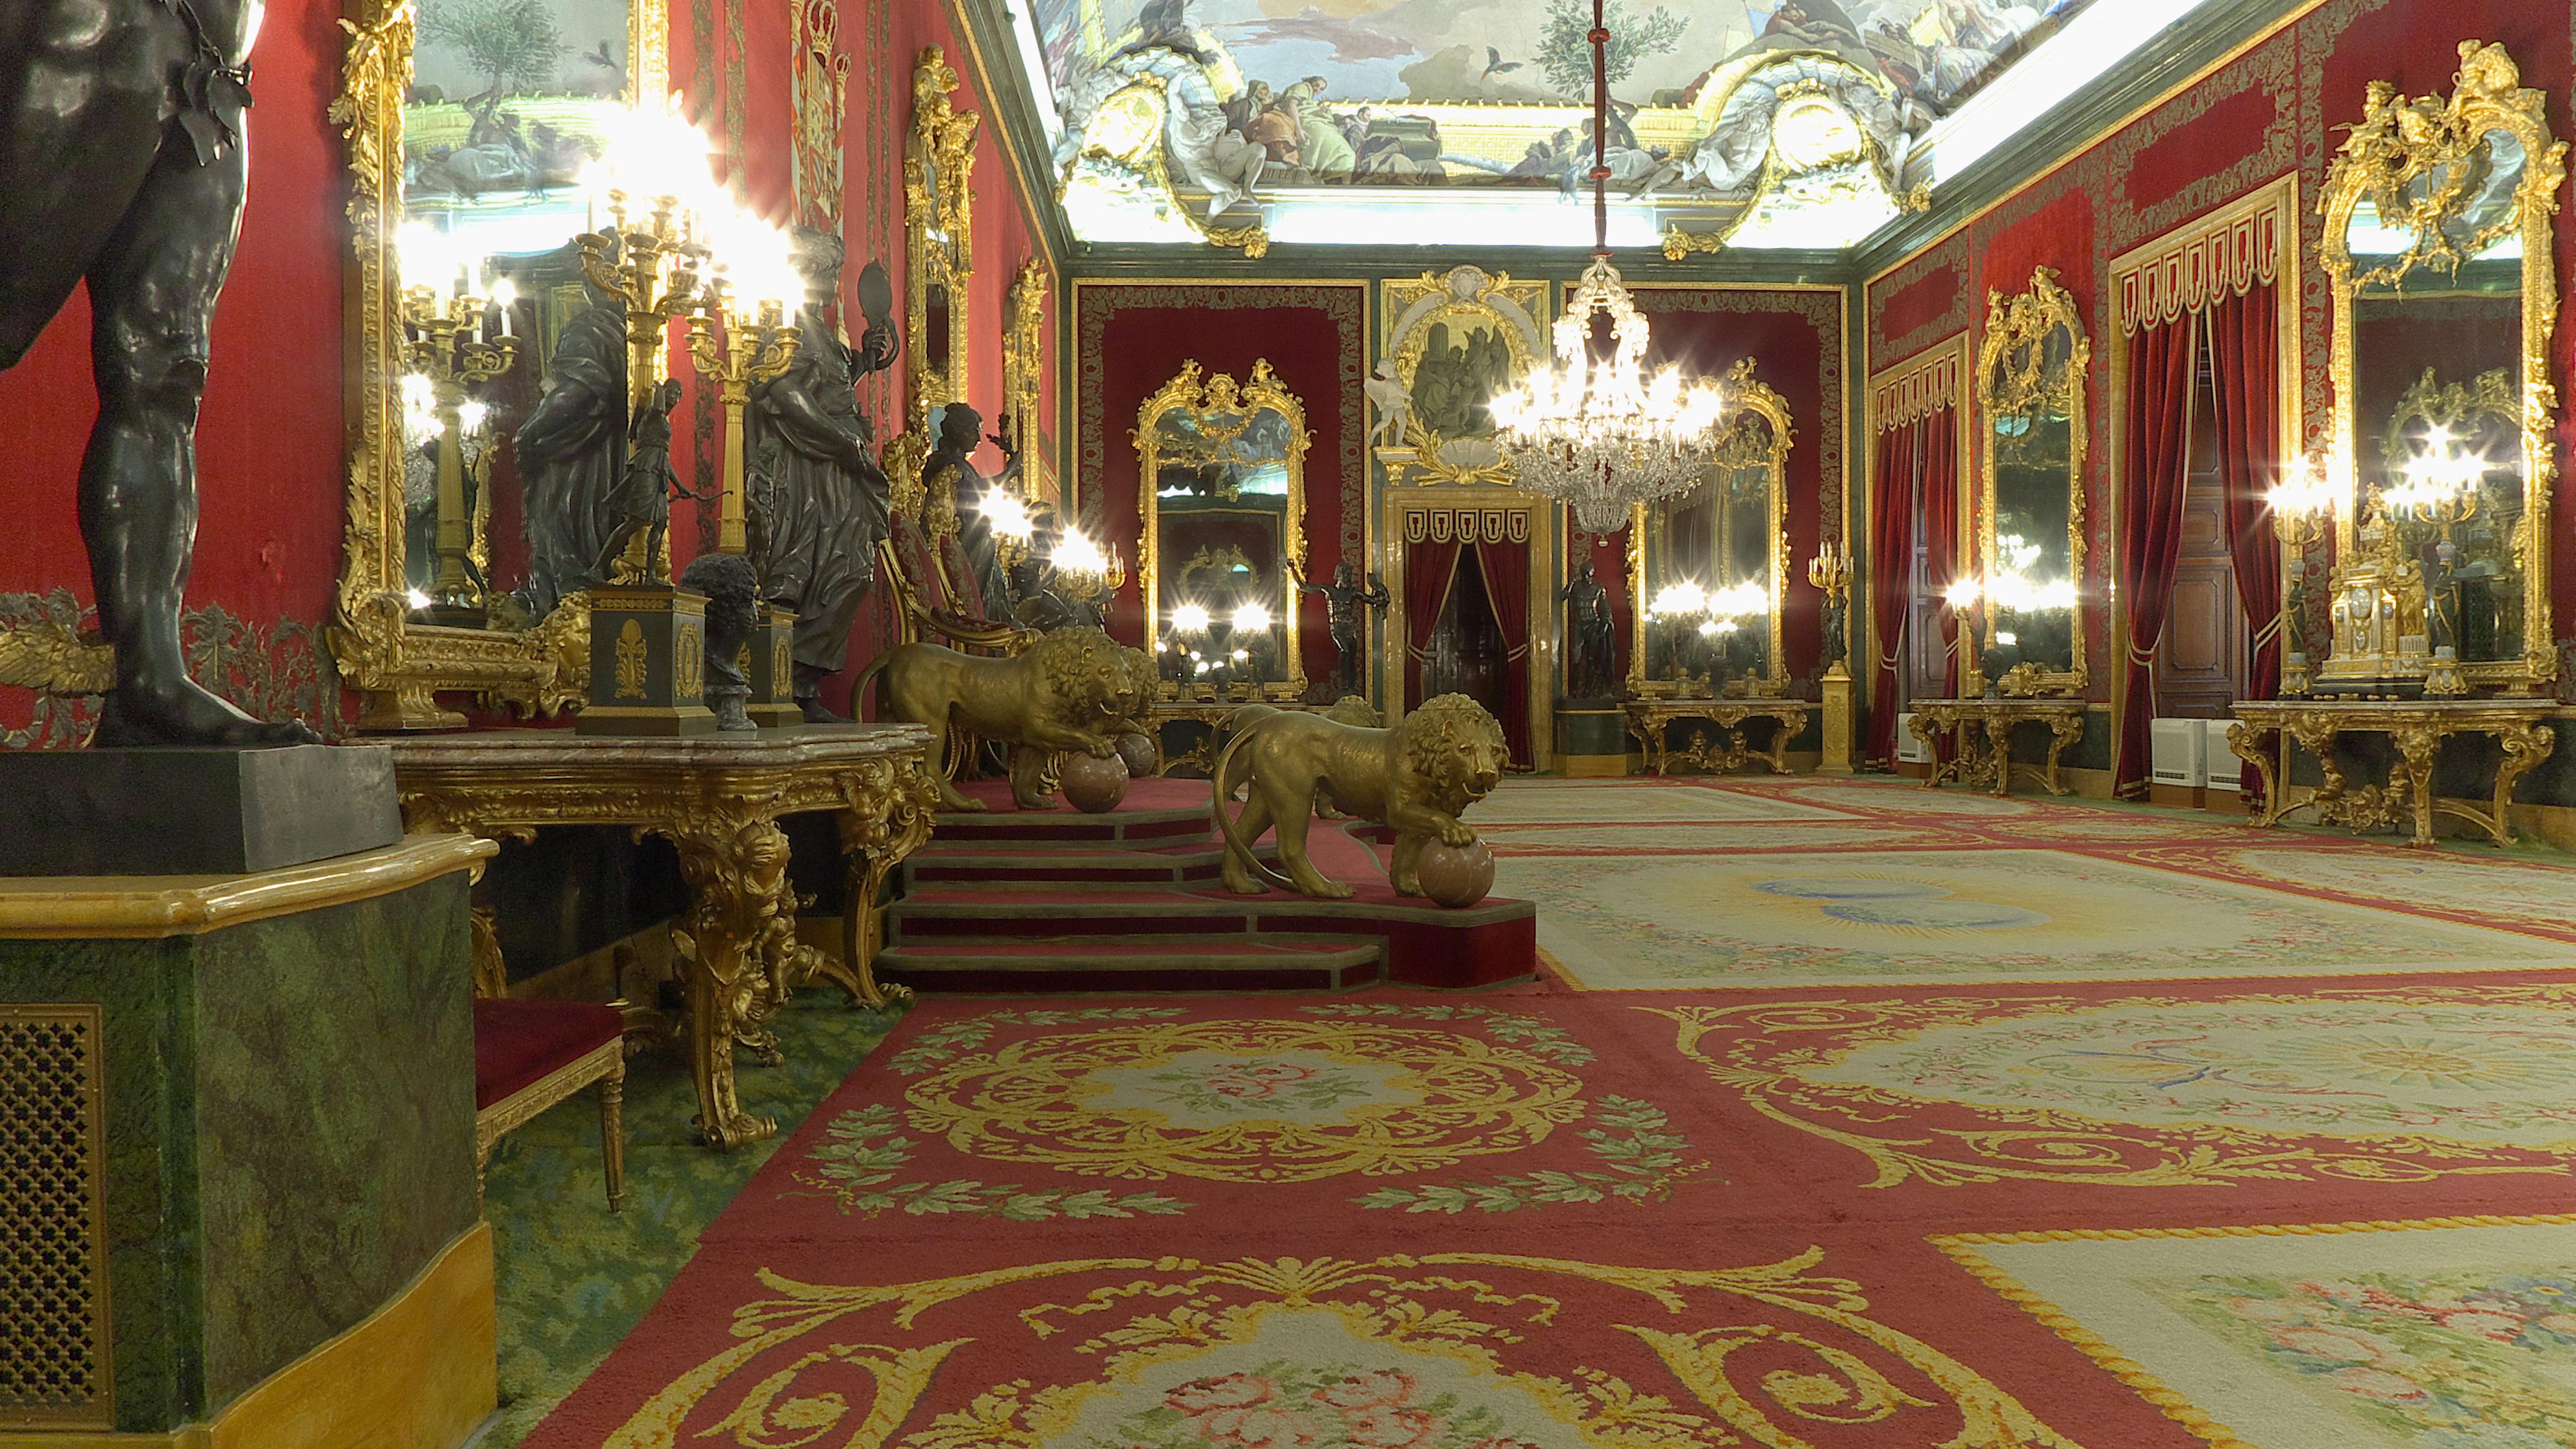 Омега королевского дворца. Королевский дворец в Мадриде зал Гаспарини. Королевский дворец в Мадриде Тронный зал. Королевский дворец Palacio real Мадрид. Дворец короля Швеции Тронный зал.